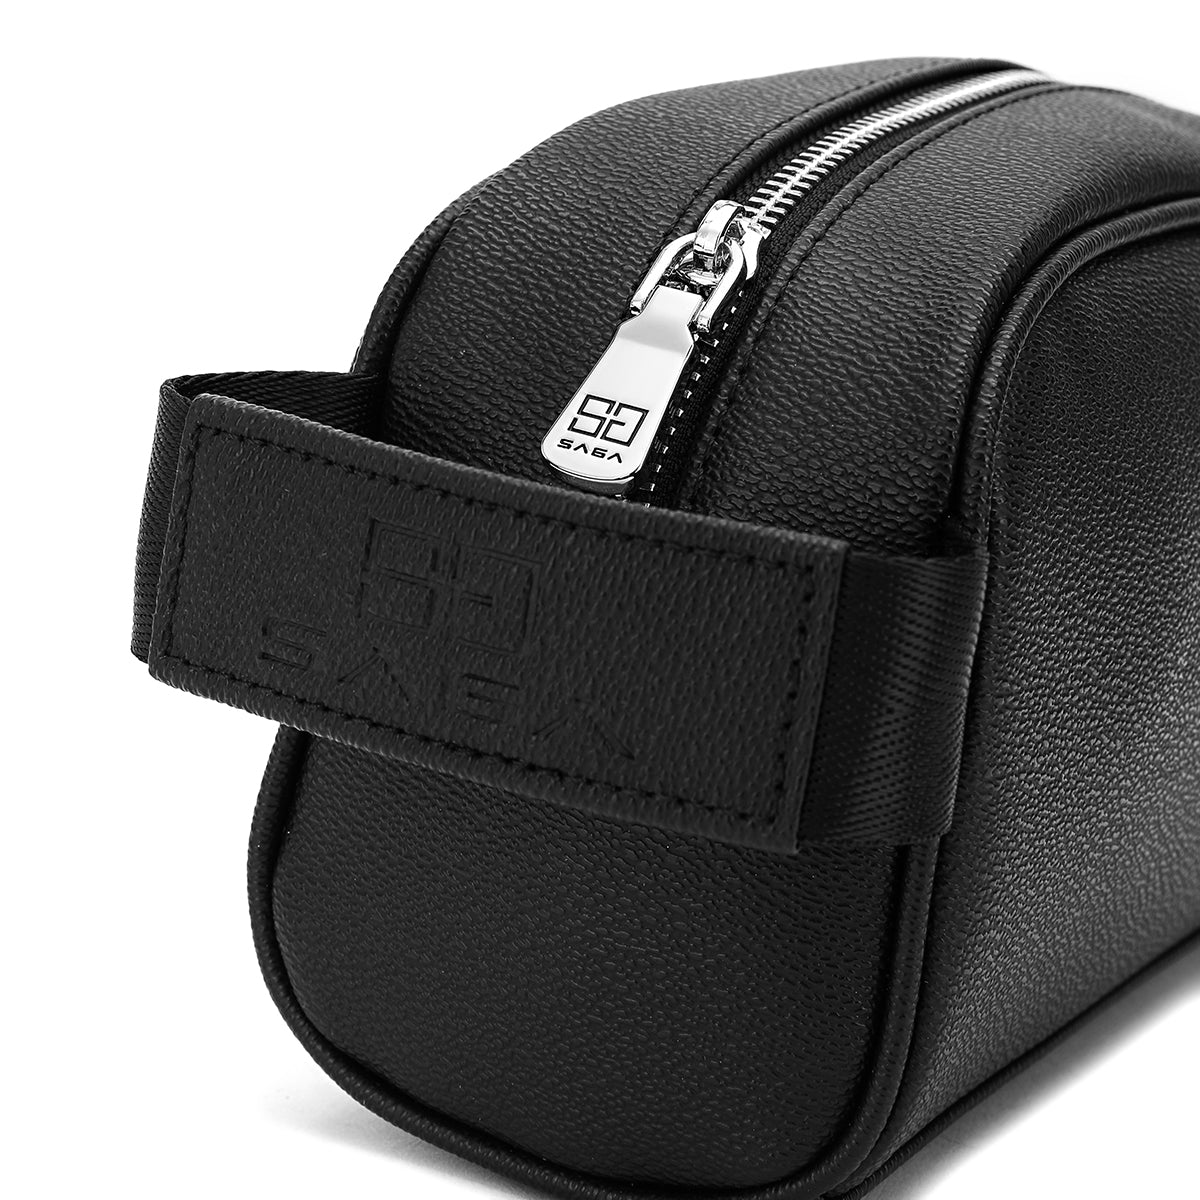 Men's handbag, classic and elegant design, width 22 cm, available in three colors